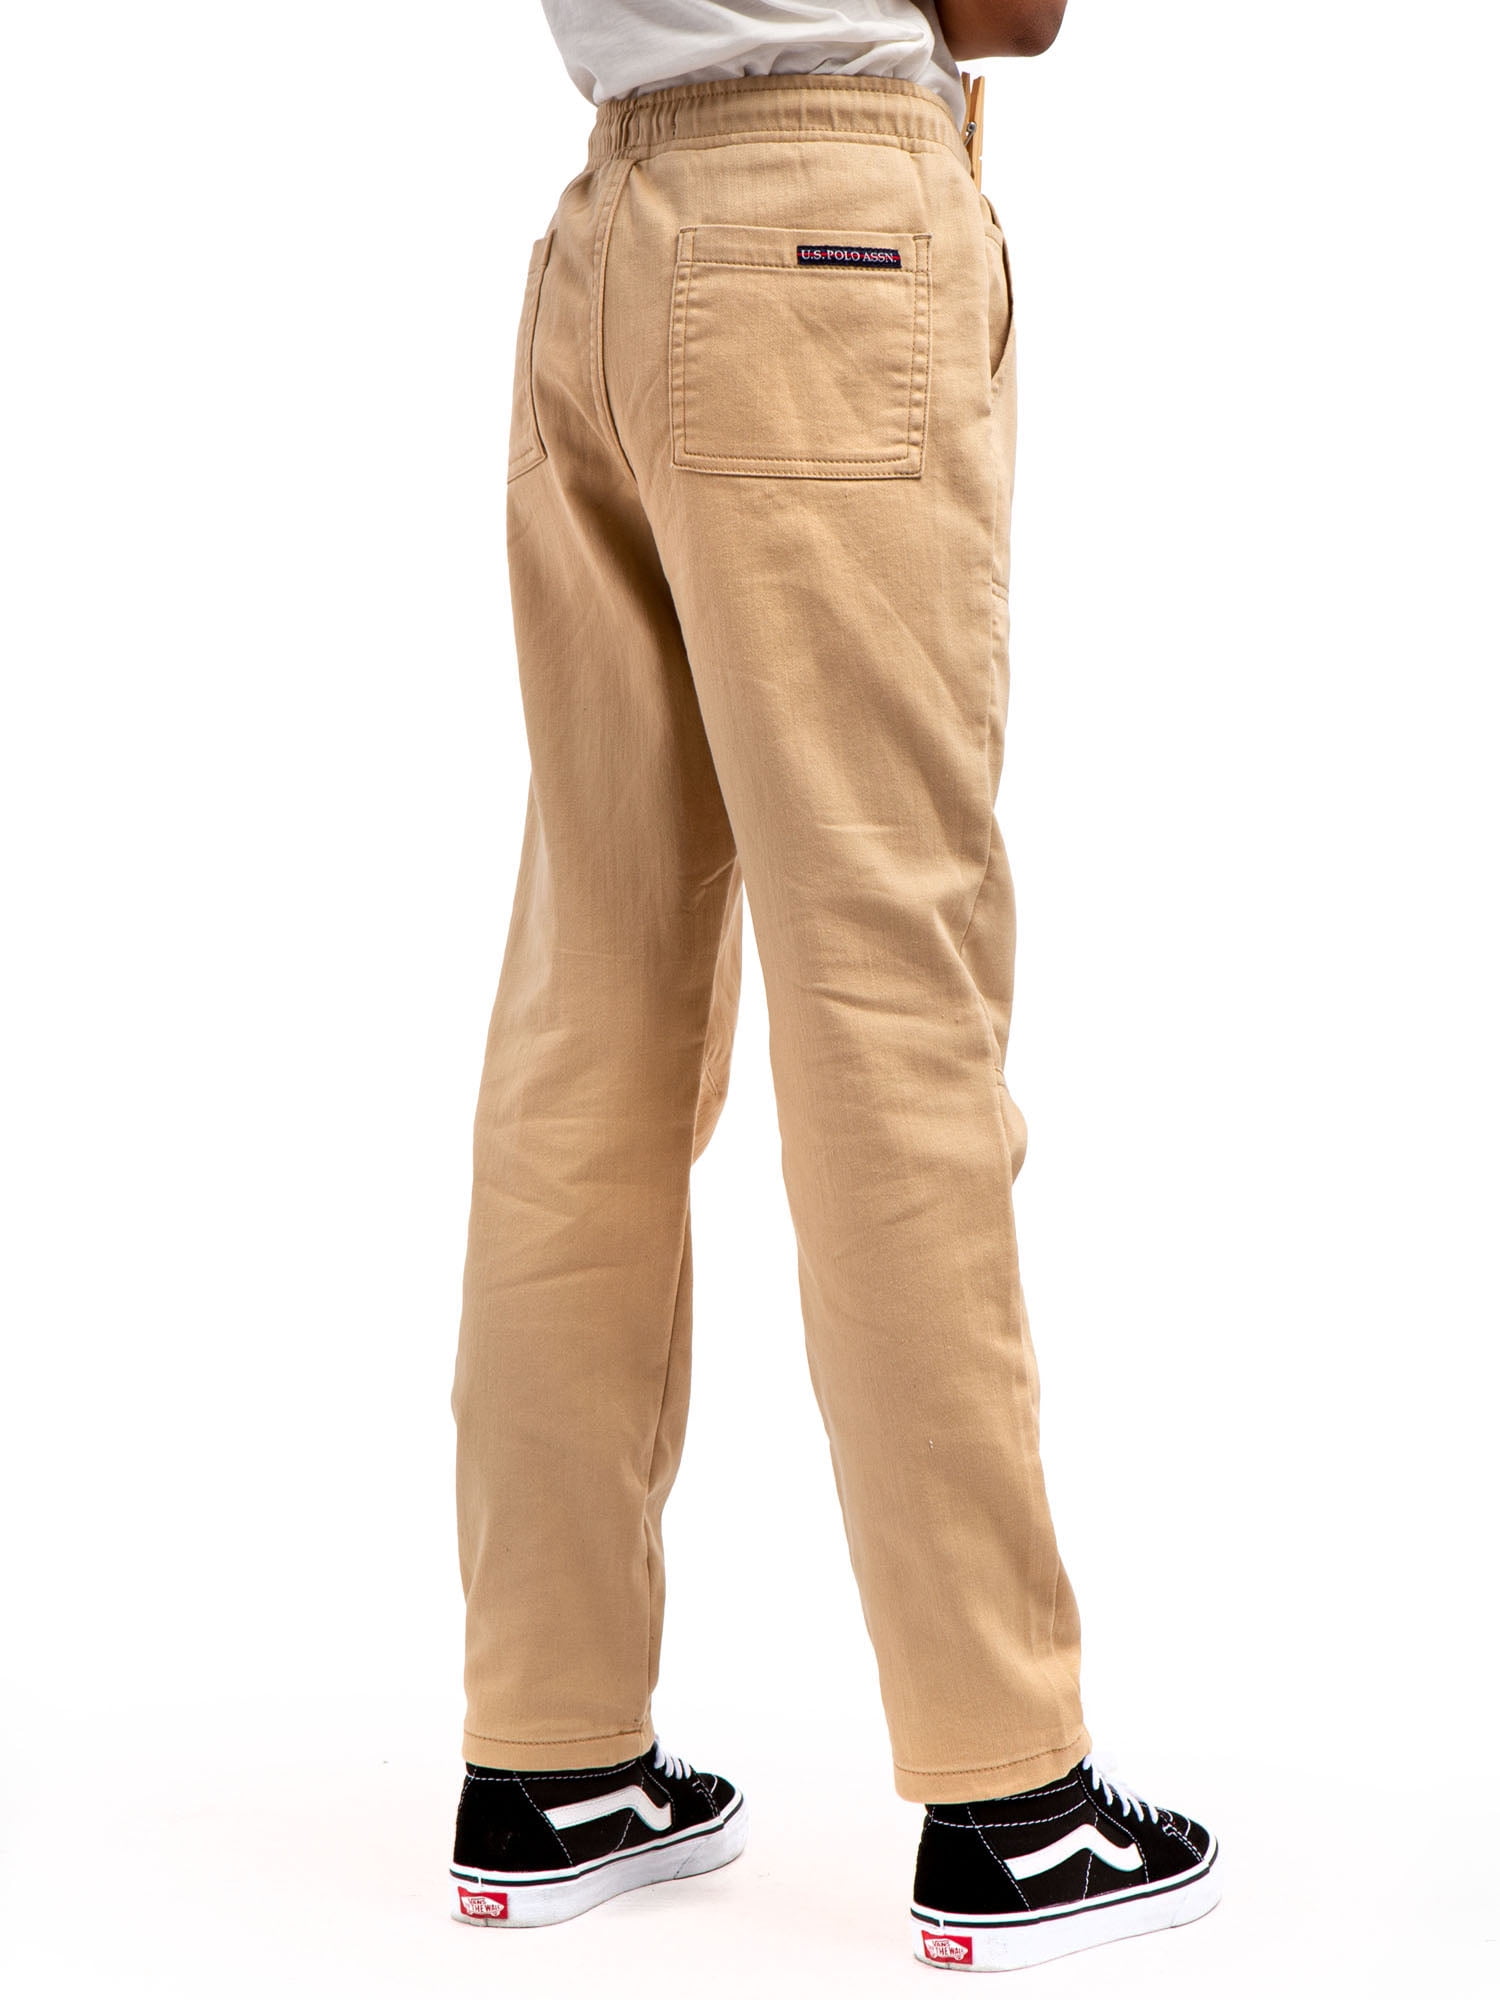 U.S. POLO ASSN. Colour Block Track Pants(Brown 30) 